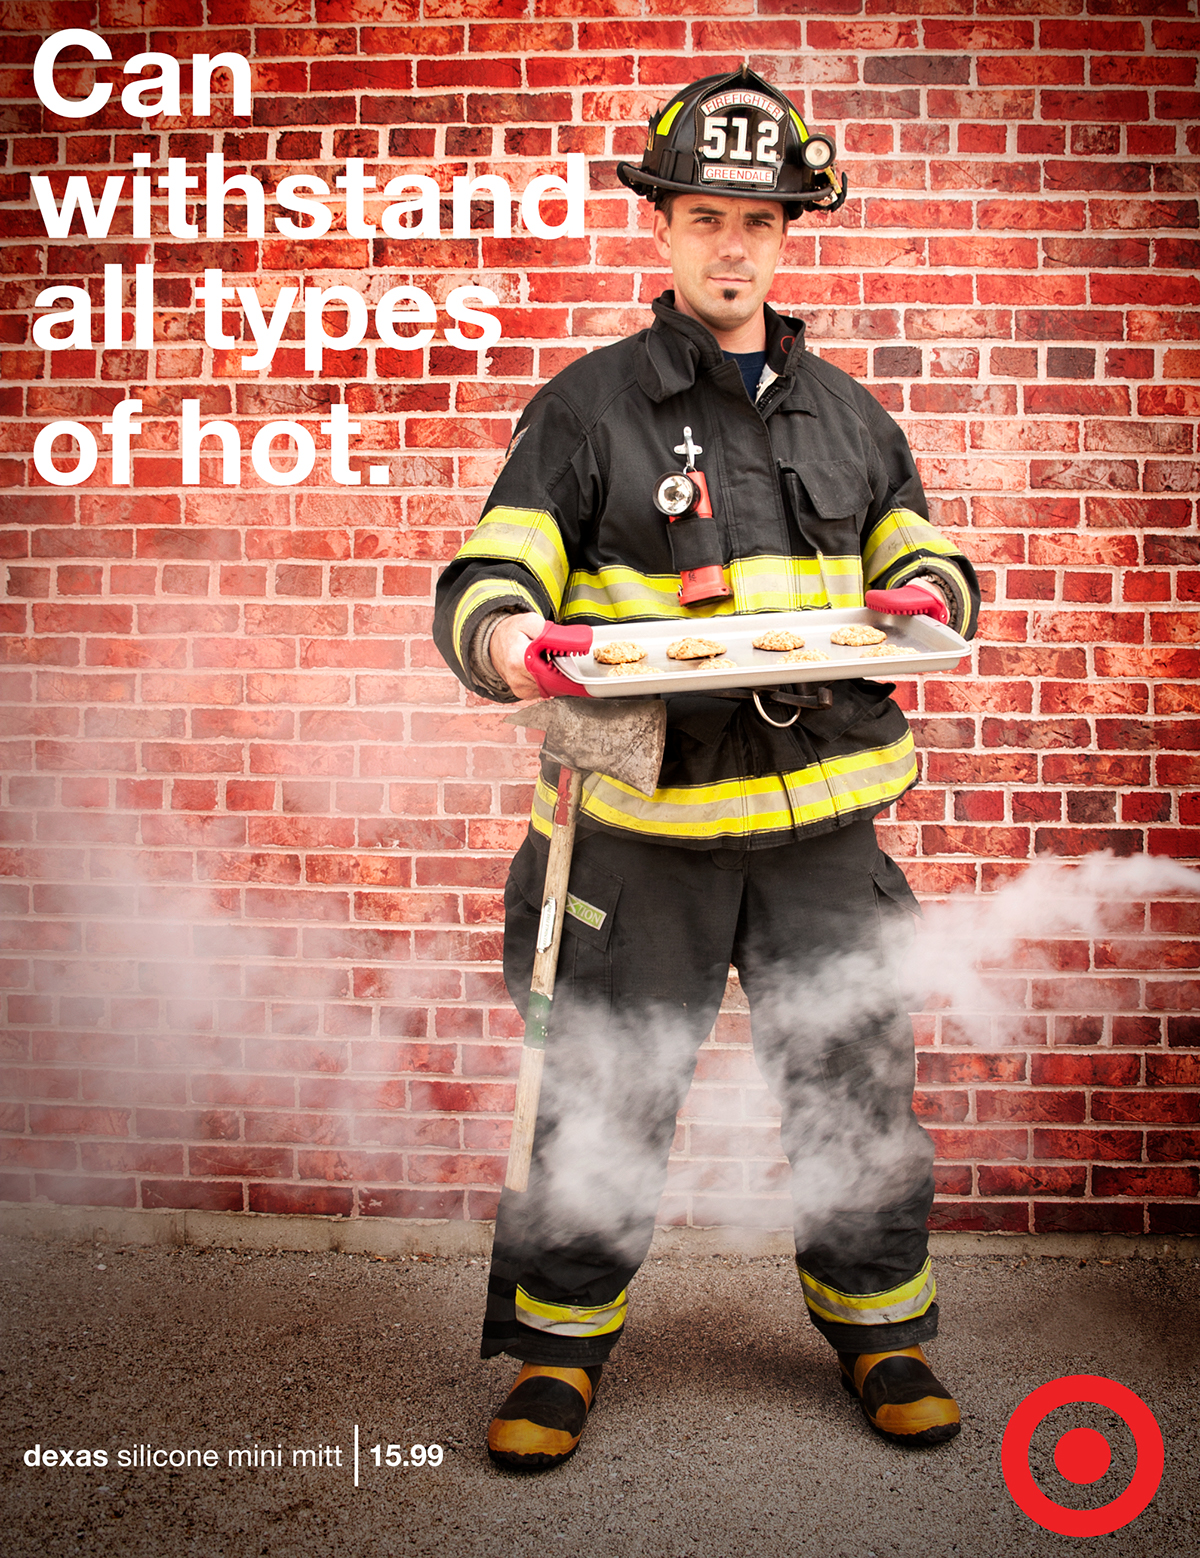 photoshop target advertisement Firefighter cookies  baking  oven mitt  dexas  silicone   fireman smoke  red